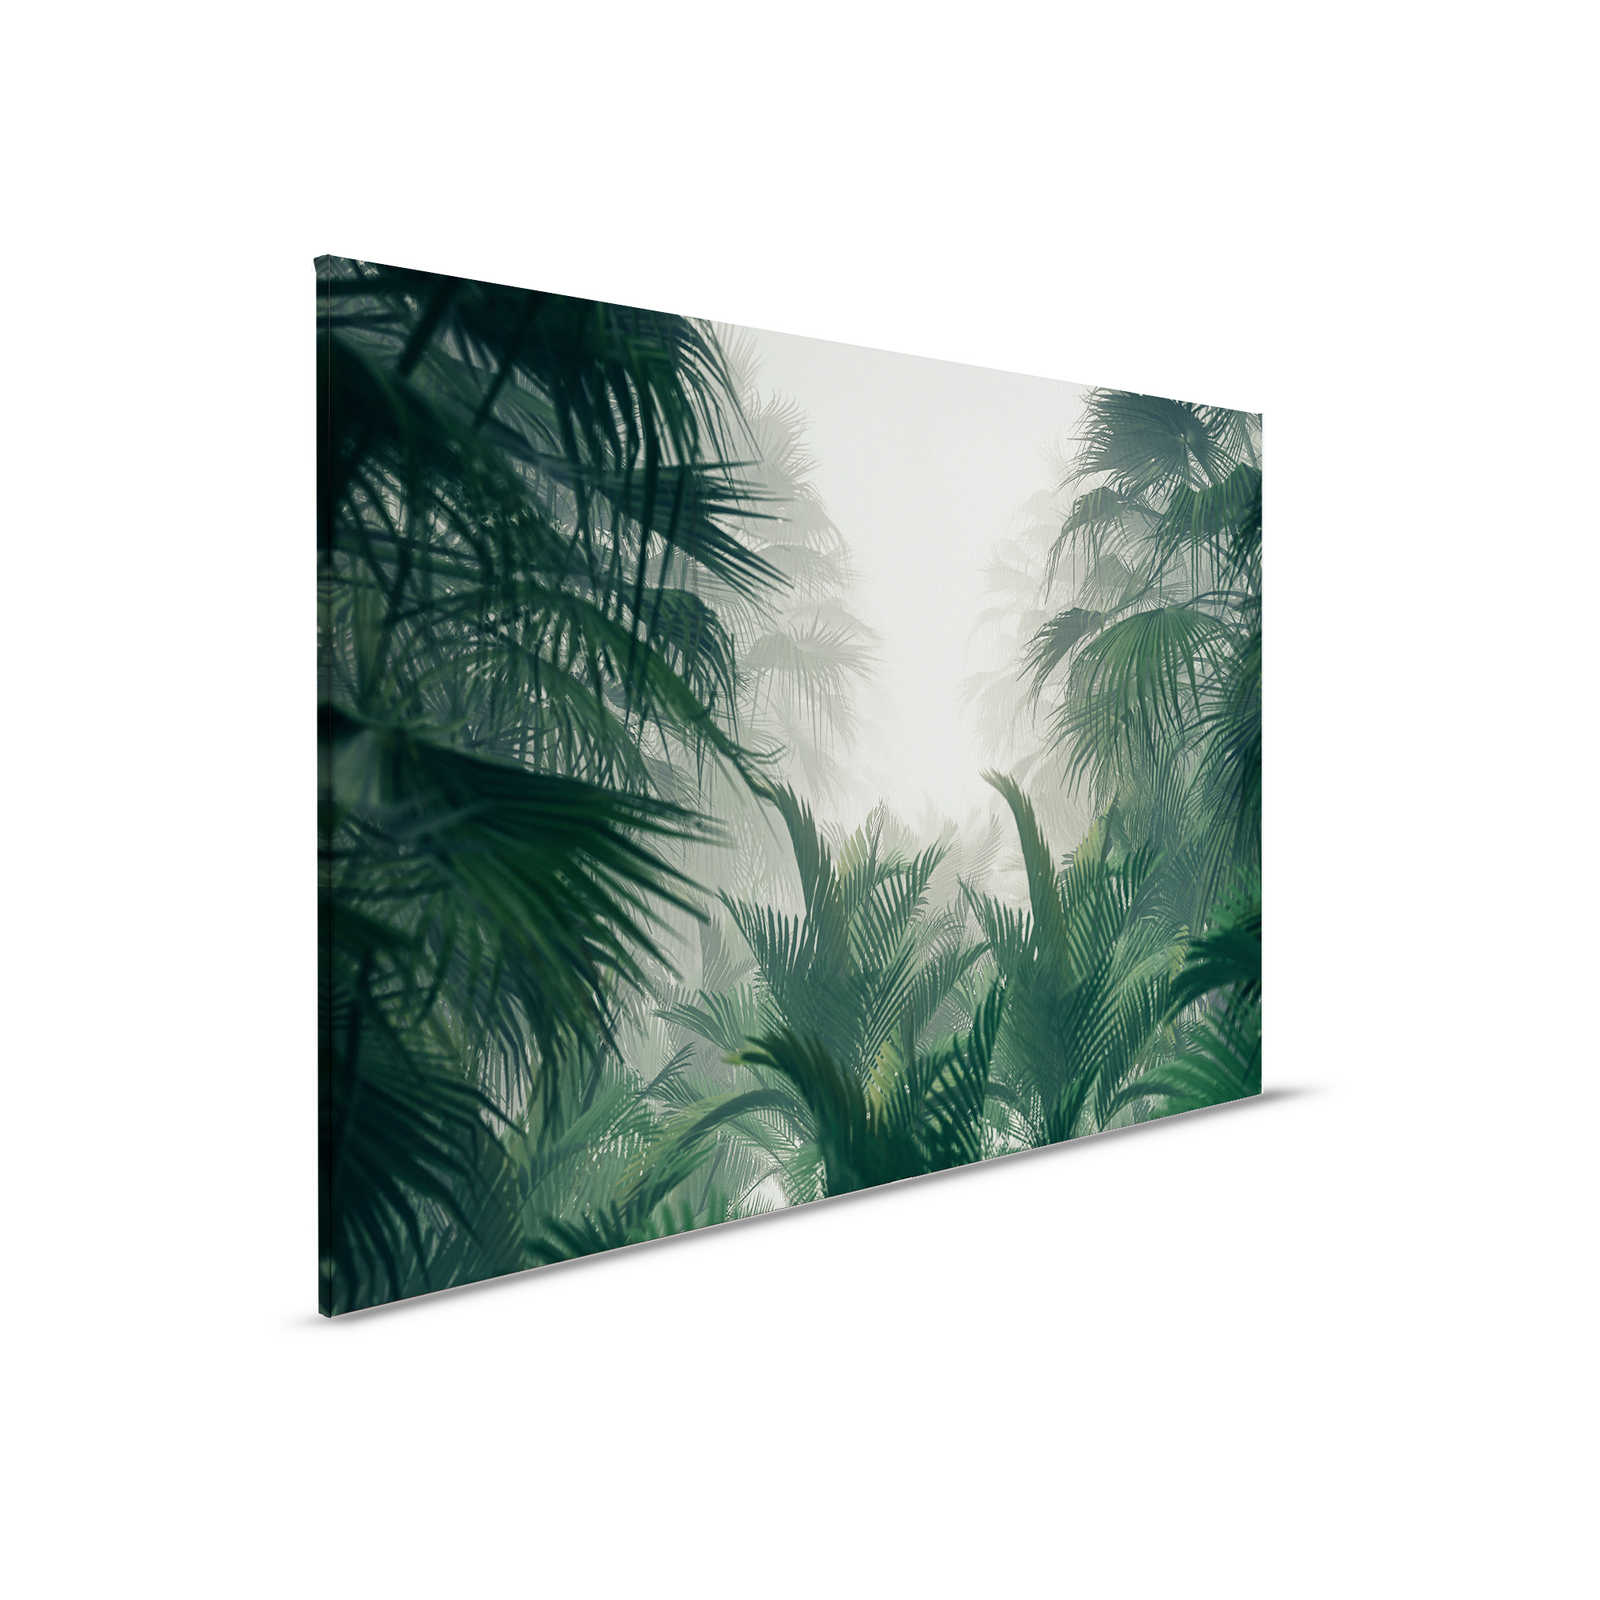 Rainy Season Jungle View Canvas Painting - 0.90 m x 0.60 m
